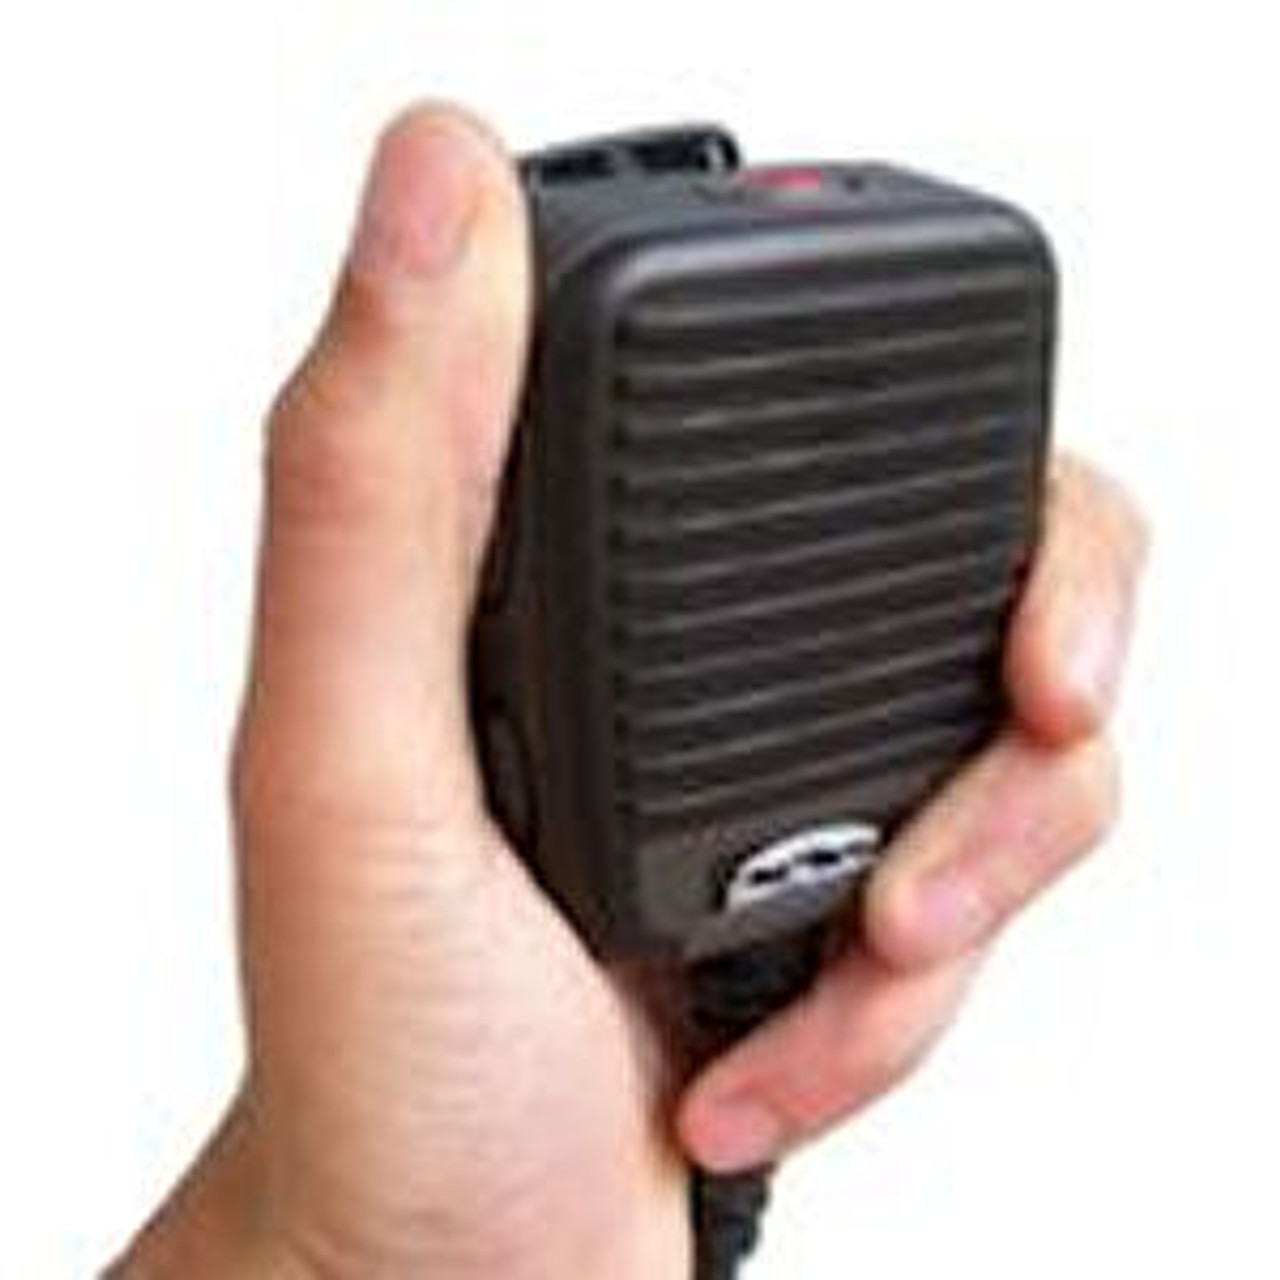 Tait TP9335 Call Recording Ruggedized Waterproof IP68 Speaker Mic